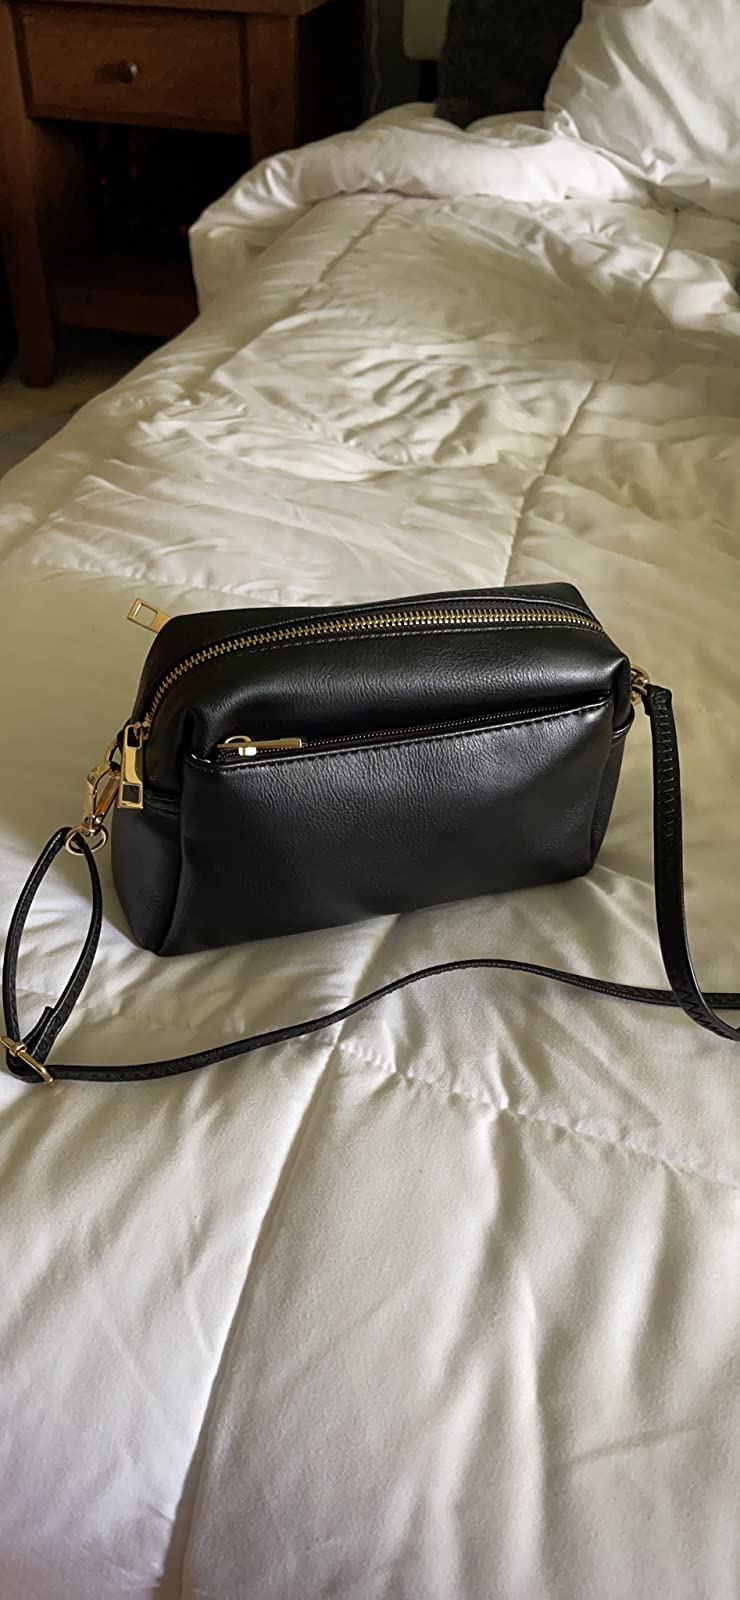 Small Crossbody Bags Women Mini PU Leather Shoulder Messenger Bag Clutch- Black - Walmart.com